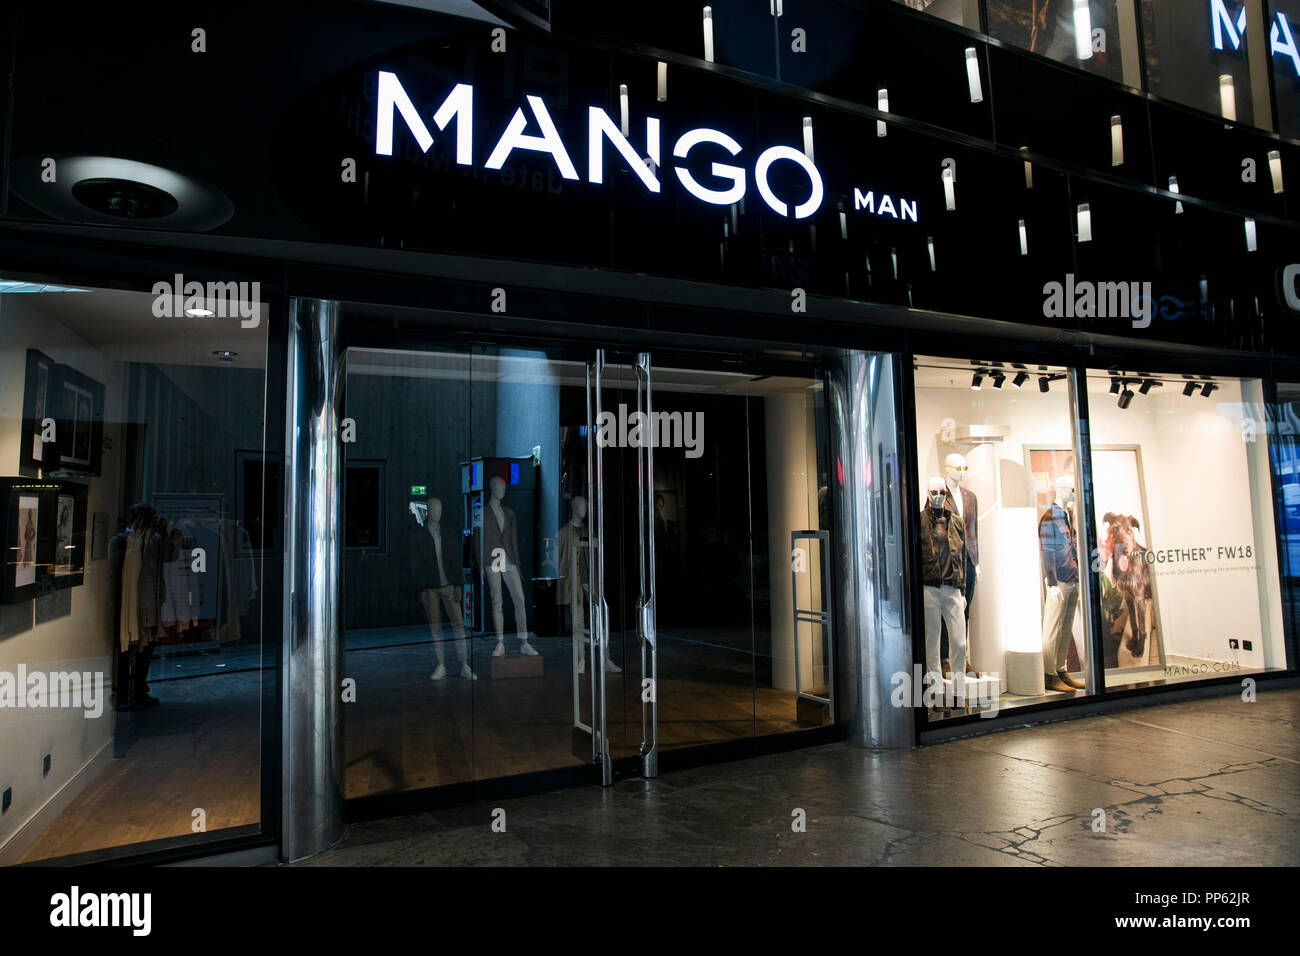 Mango man hi-res stock photography and images - Alamy